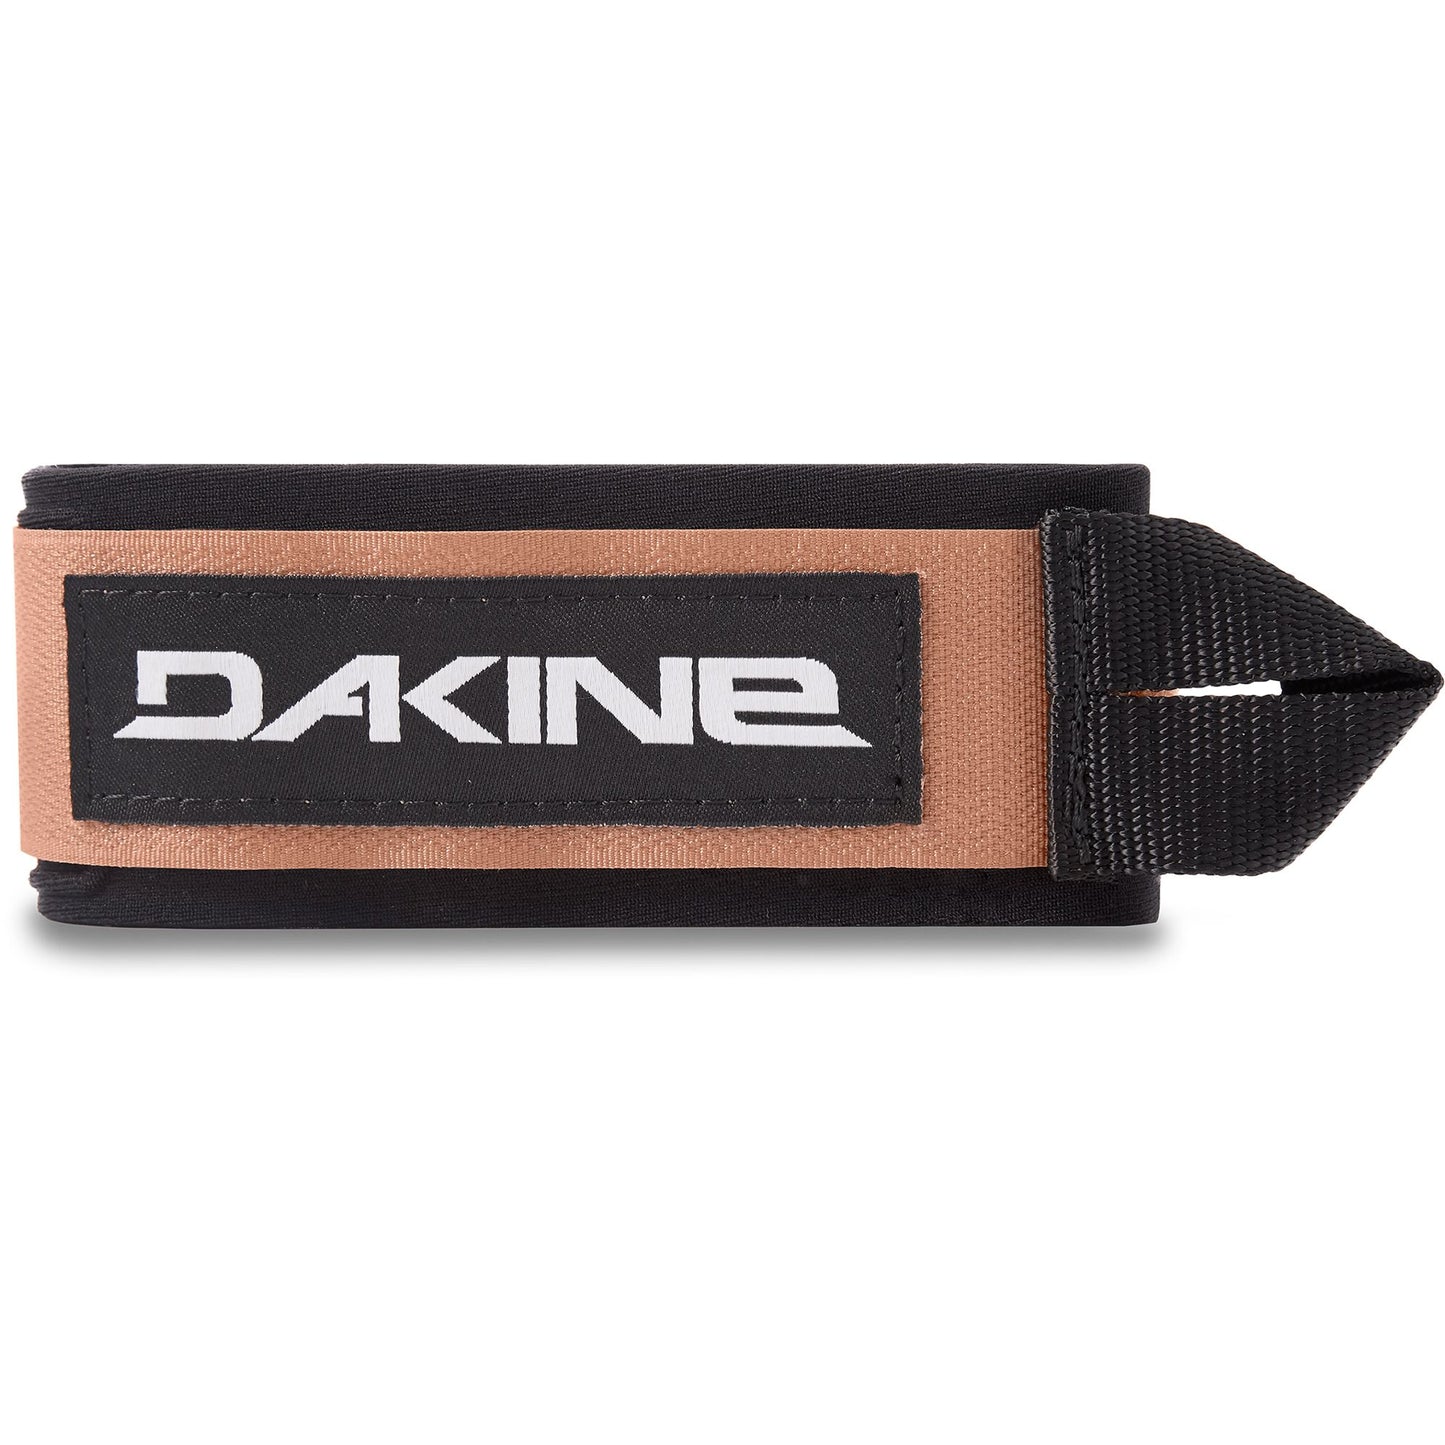 Dakine Ski Straps Caramel OS Accessories